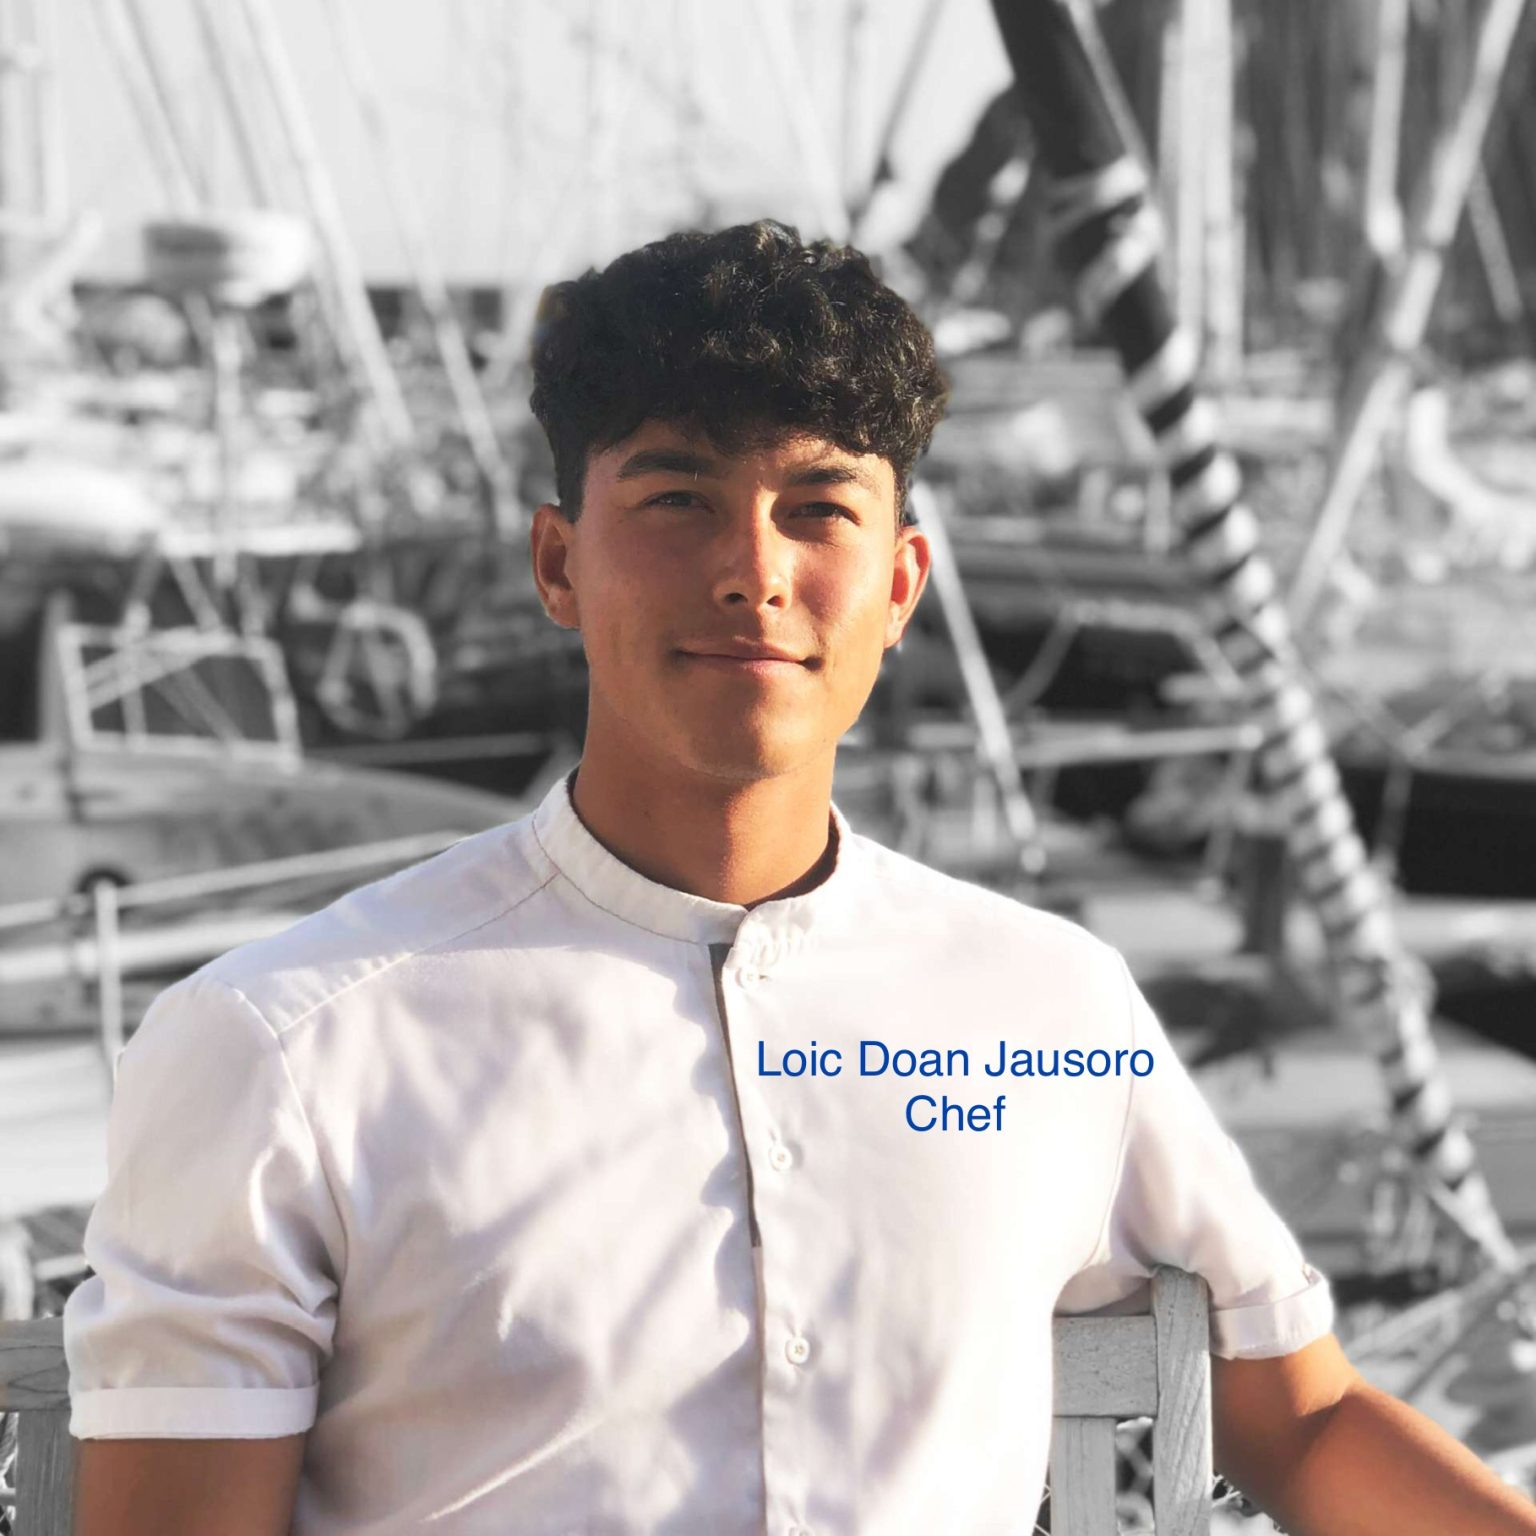 Chef Loic Doan Jausoro 64’ Jan’s Felion ~ Lagoon Power Catamaran